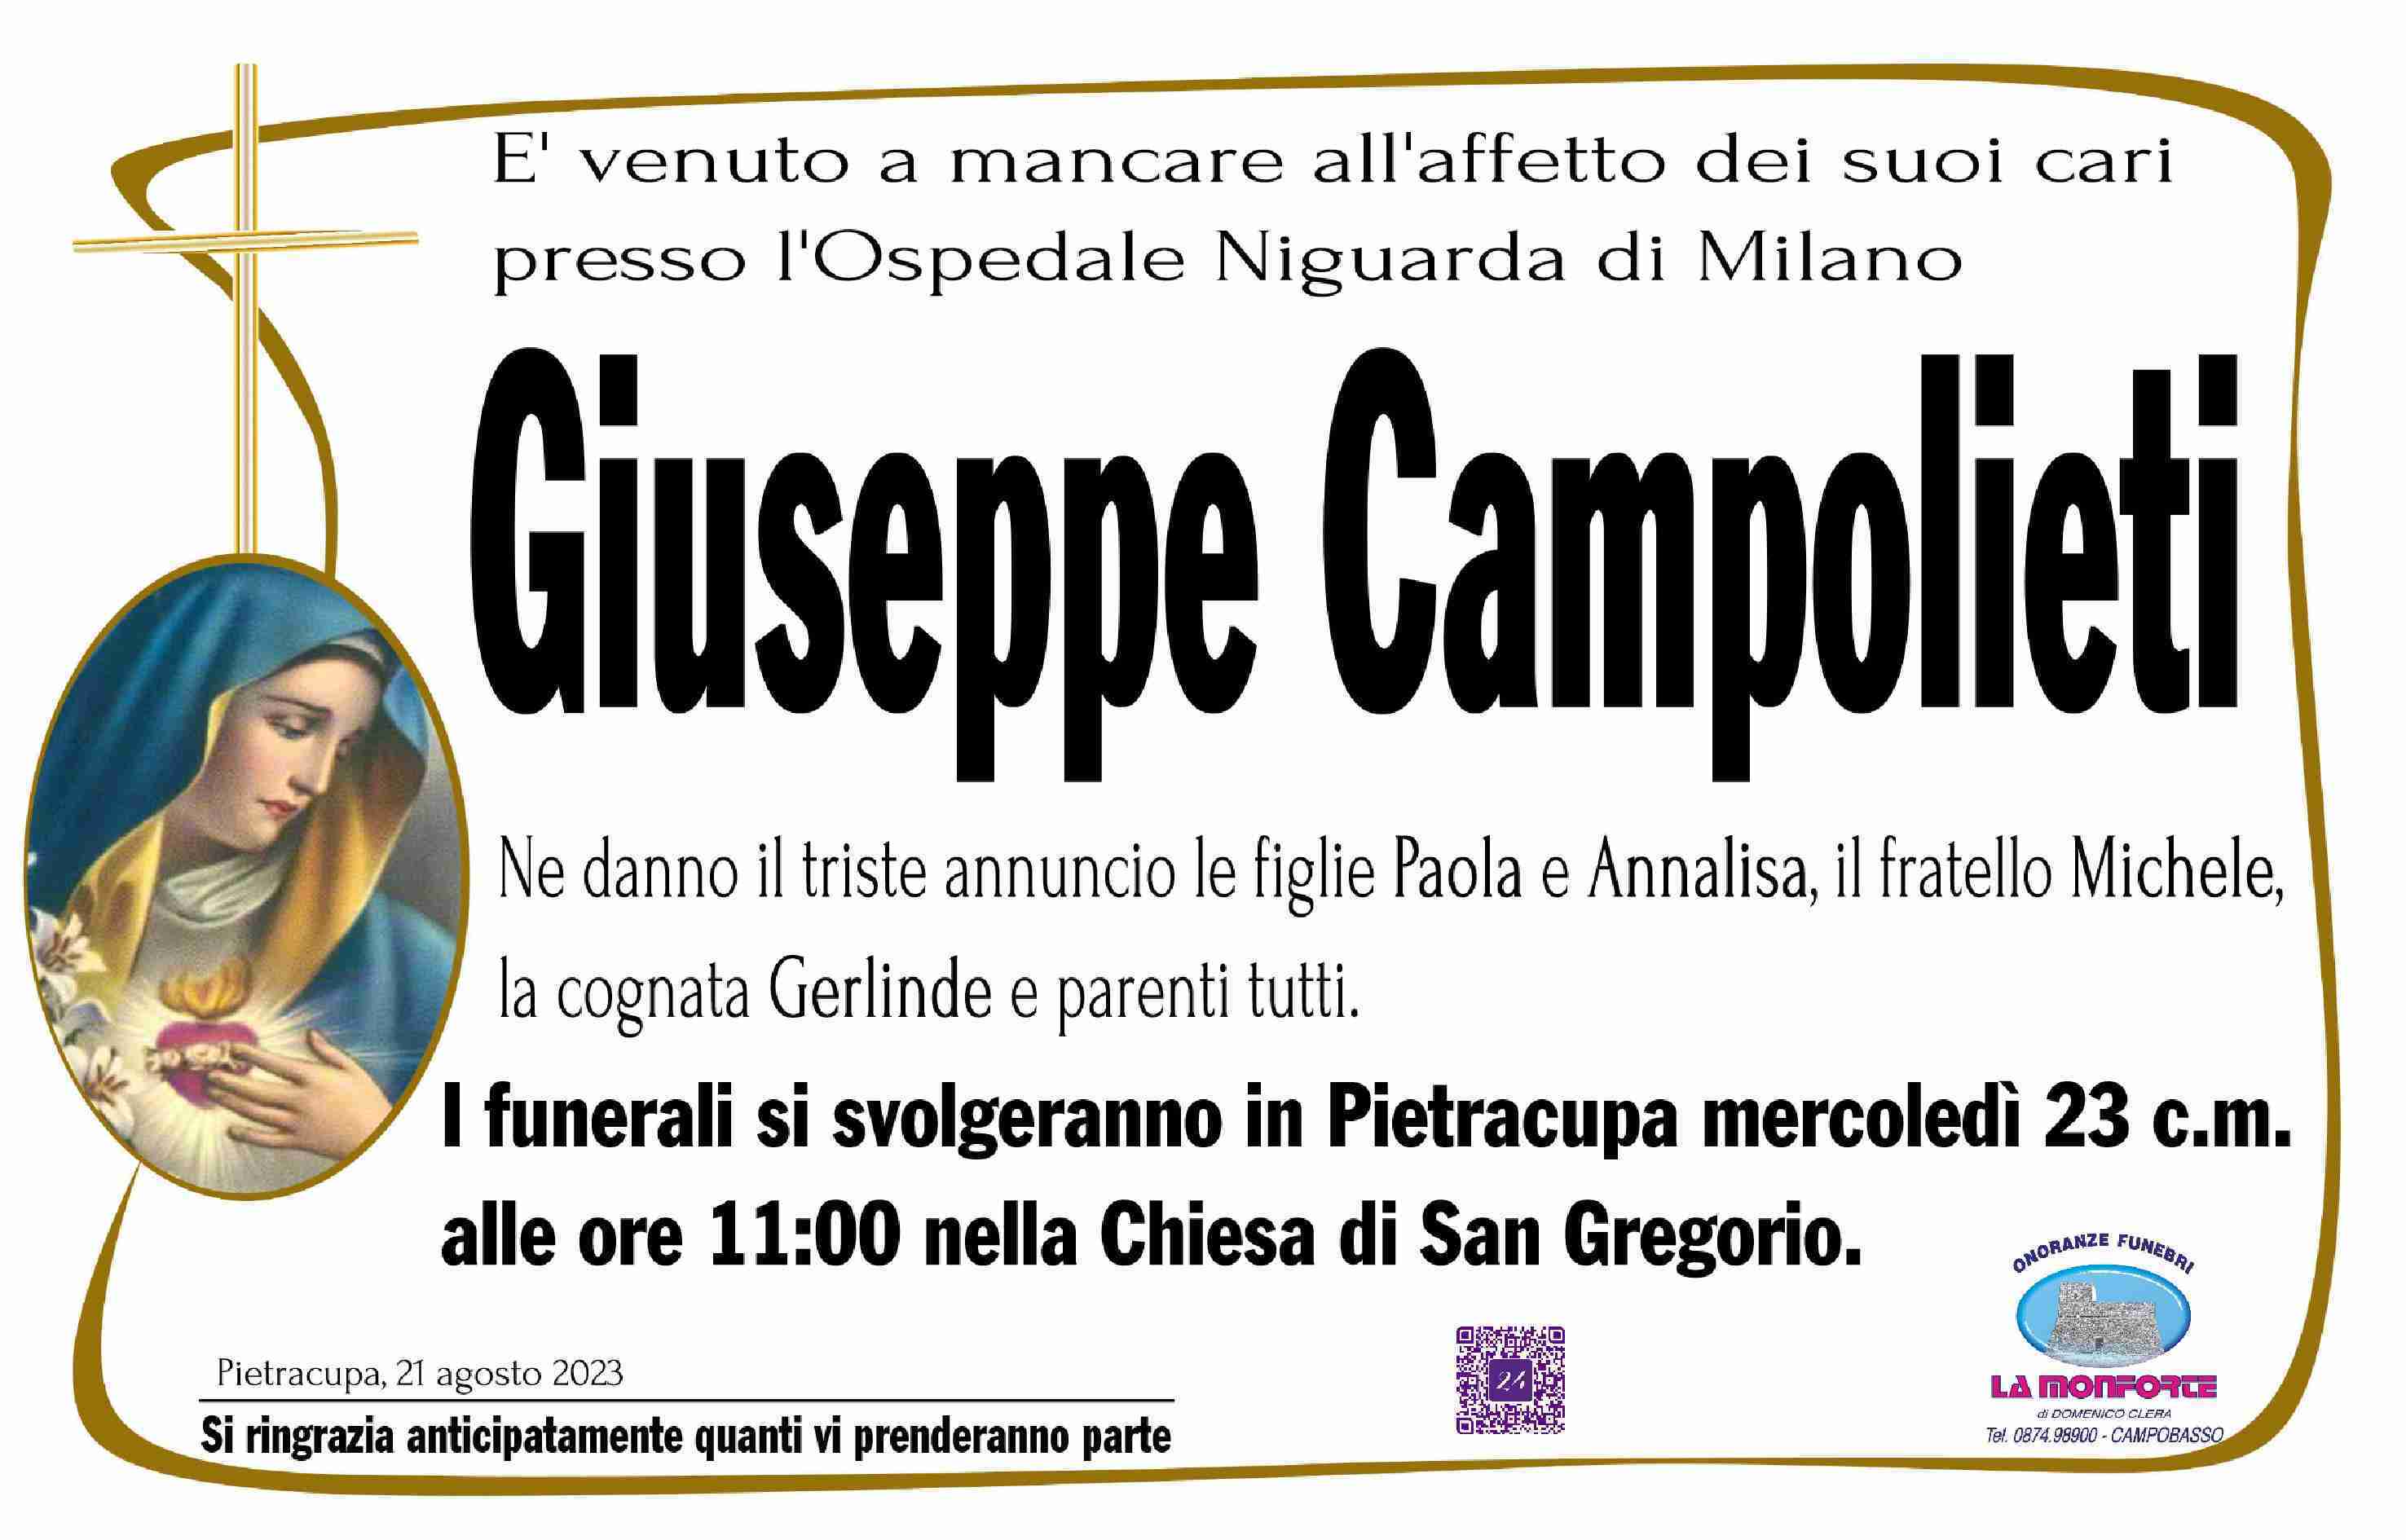 Giuseppe Campolieti